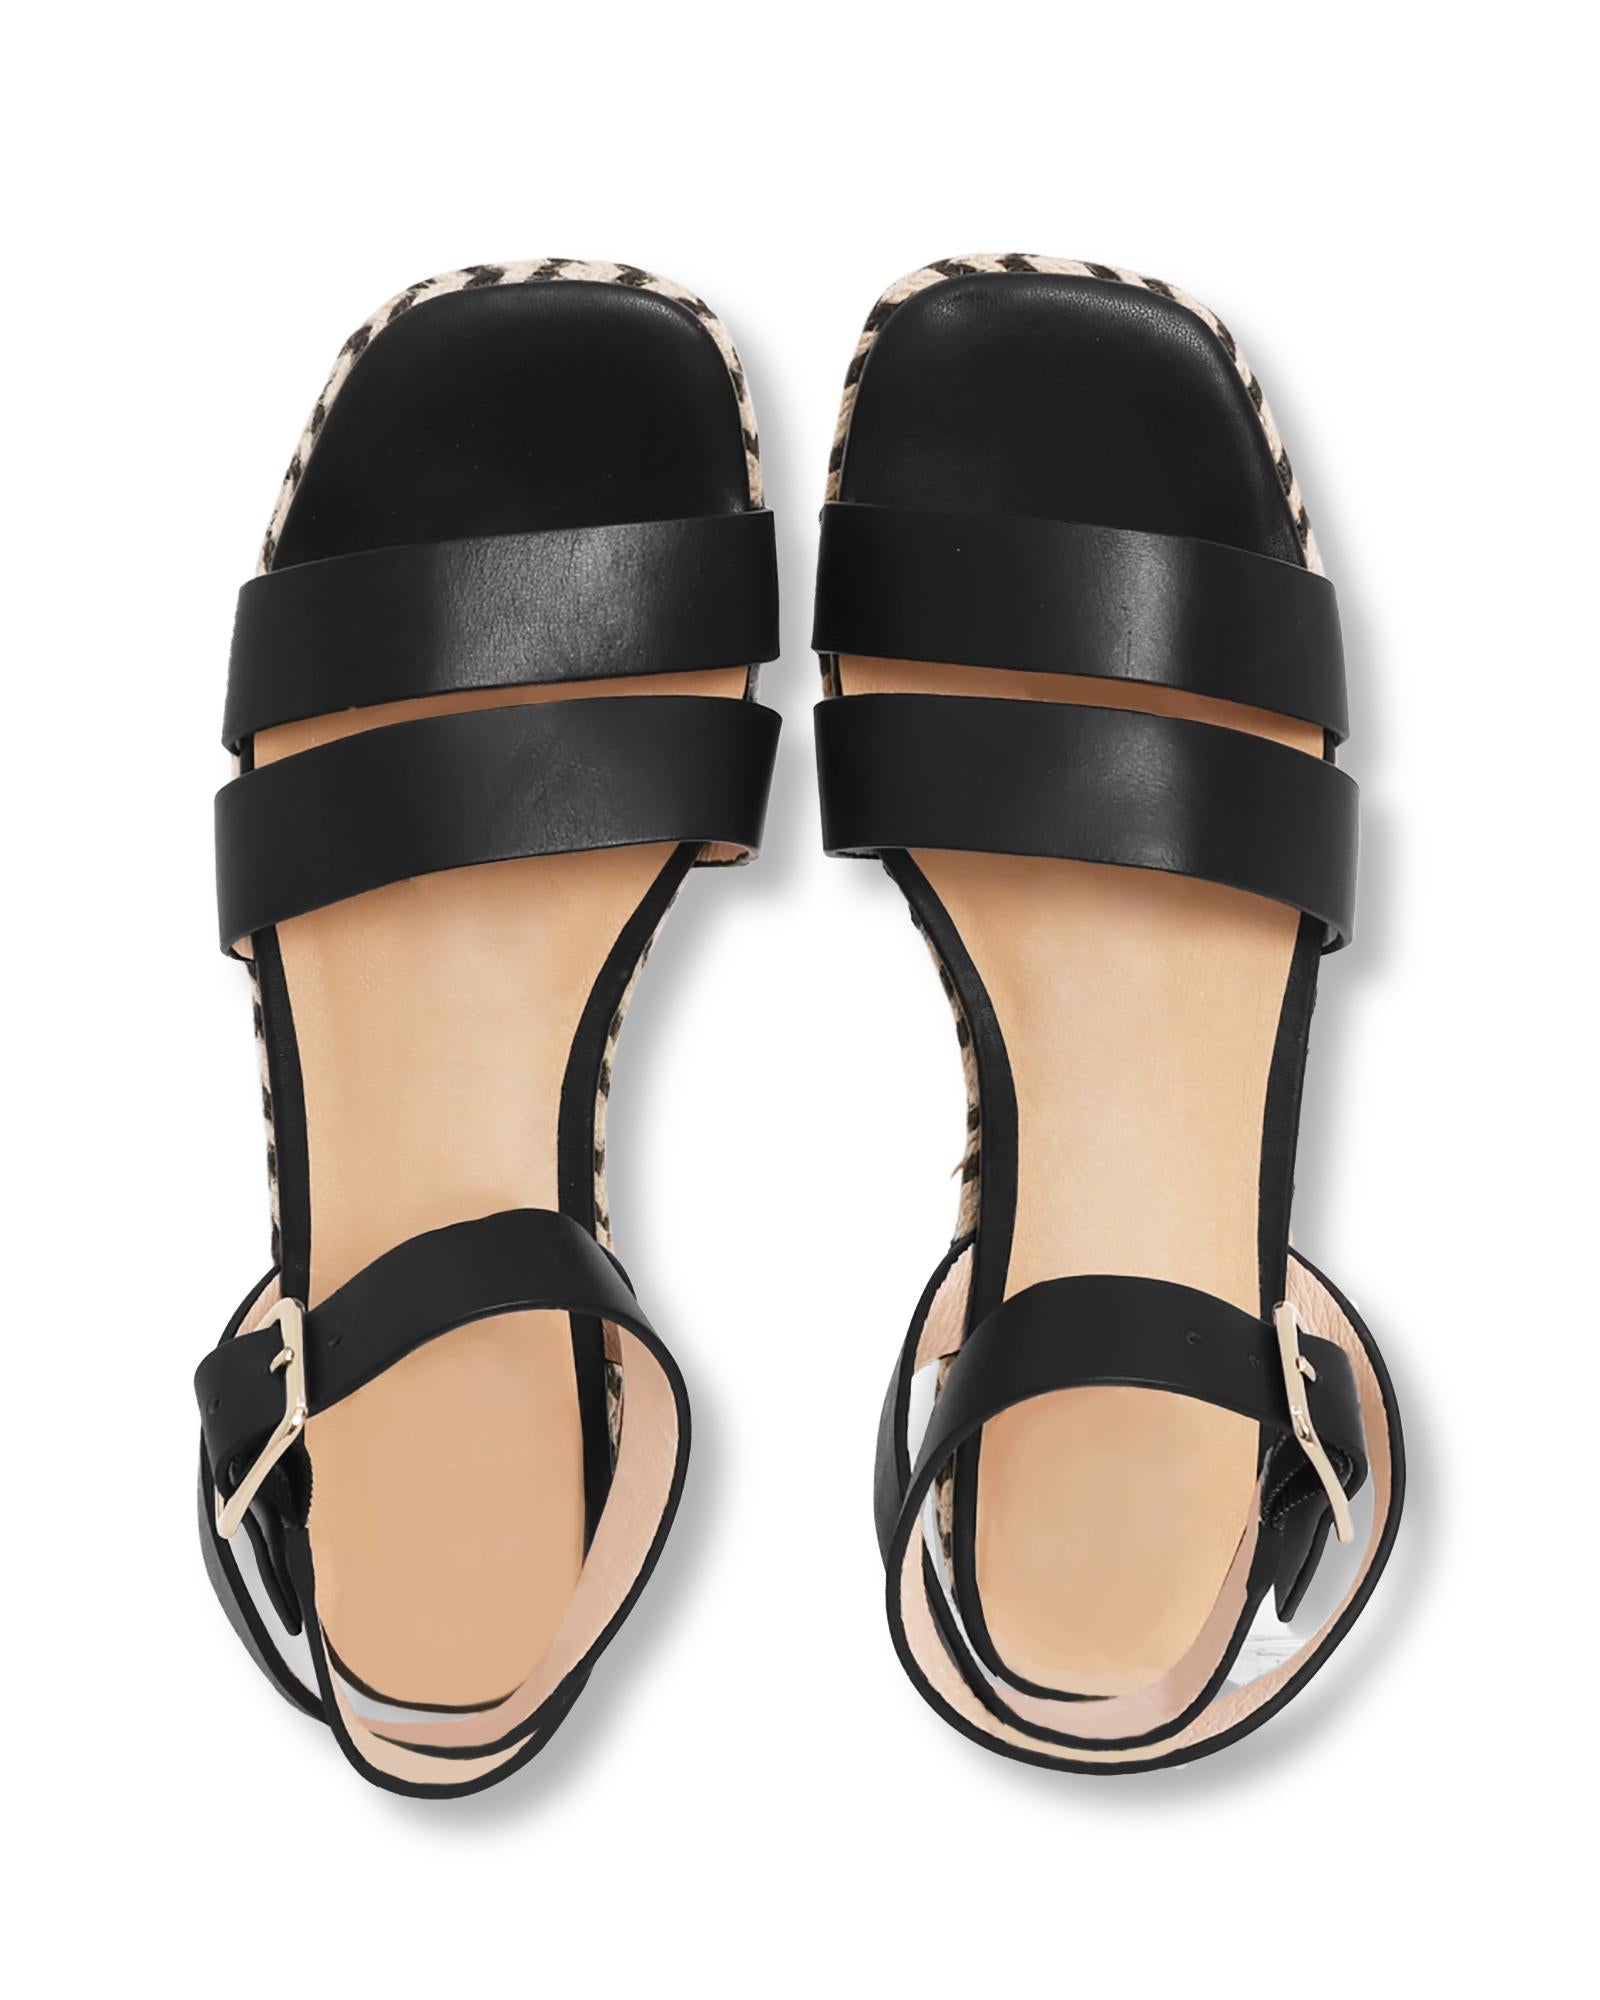 Jacinda Black 2cm Sandal